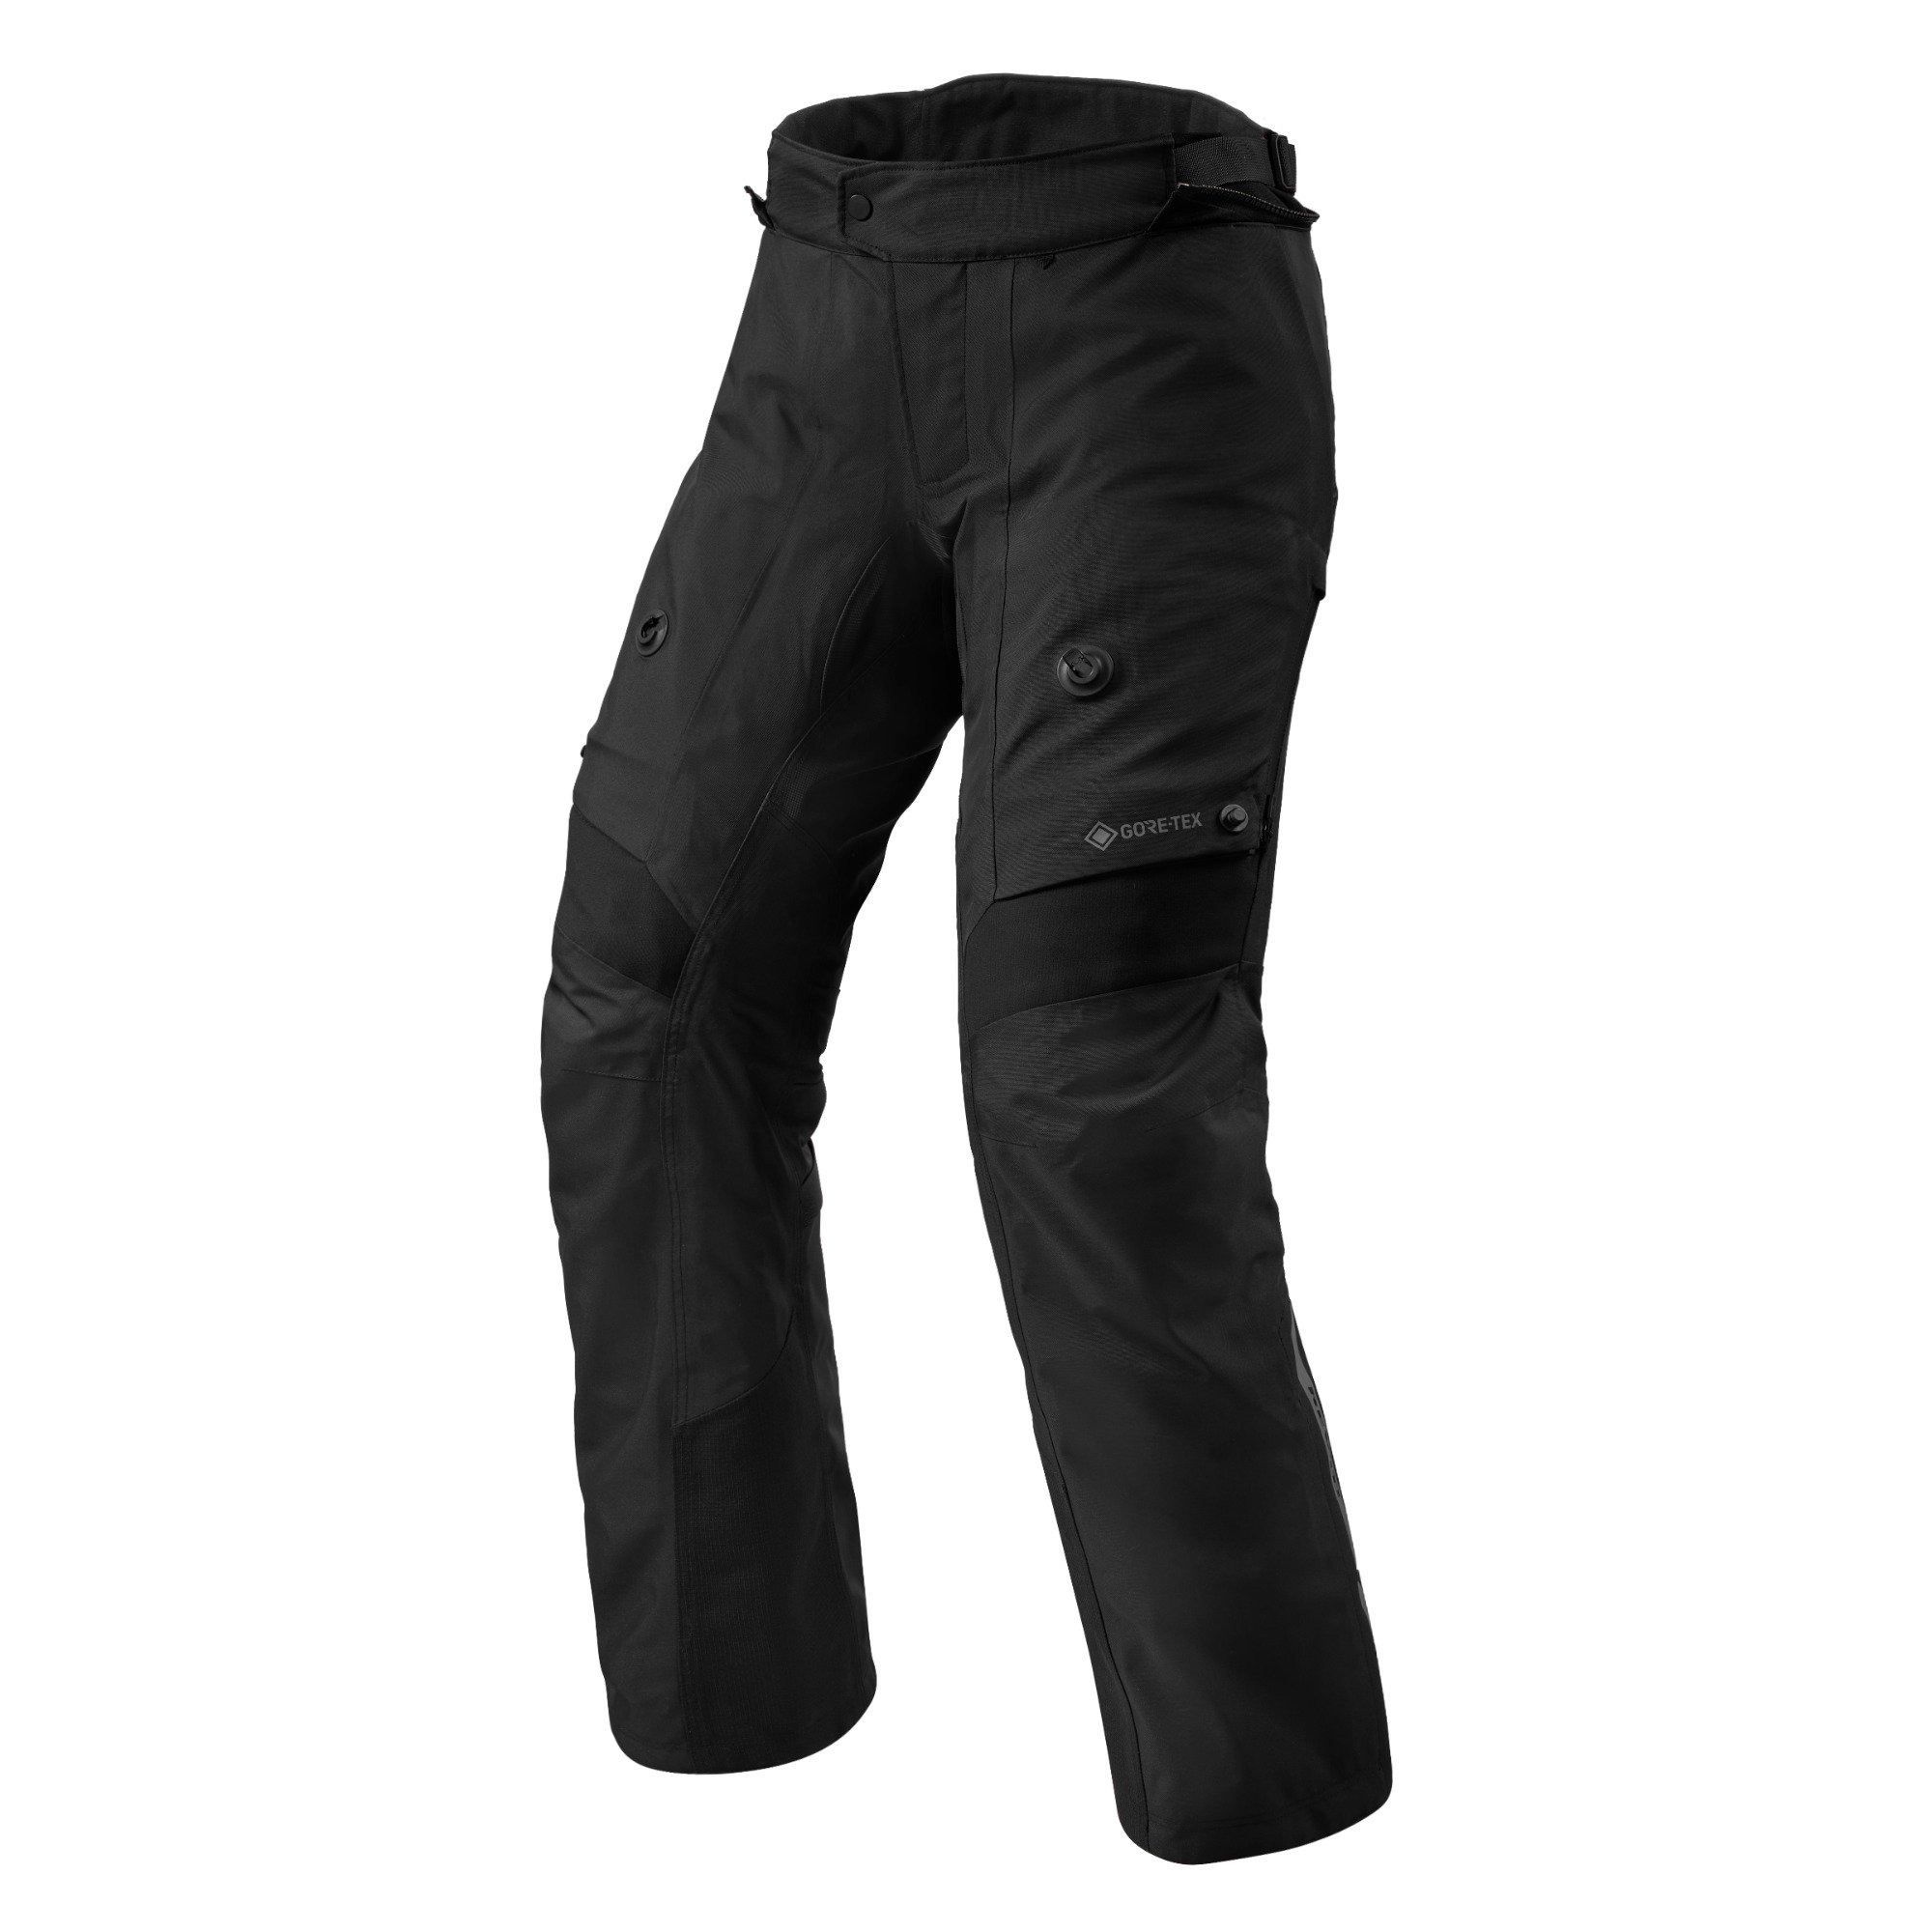 Image of REV'IT! Pants Poseidon 3 GTX Black Short Motorcycle Pants Talla 2XL